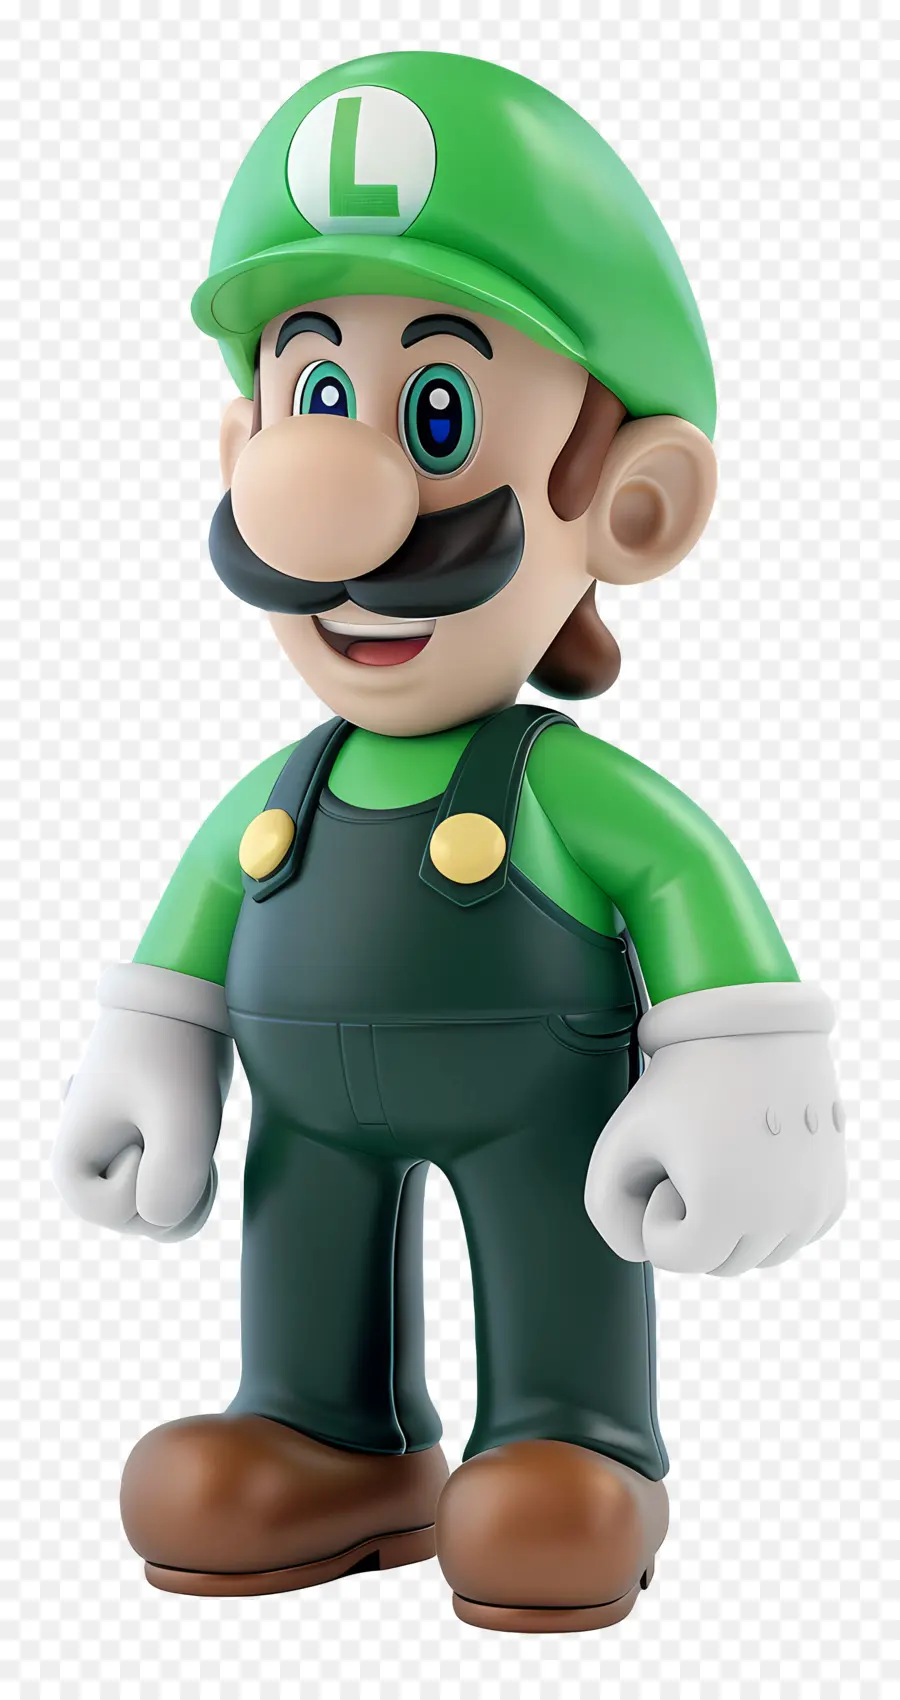 super mario - Mario in tuta verde e cappello rosso, sorridendo